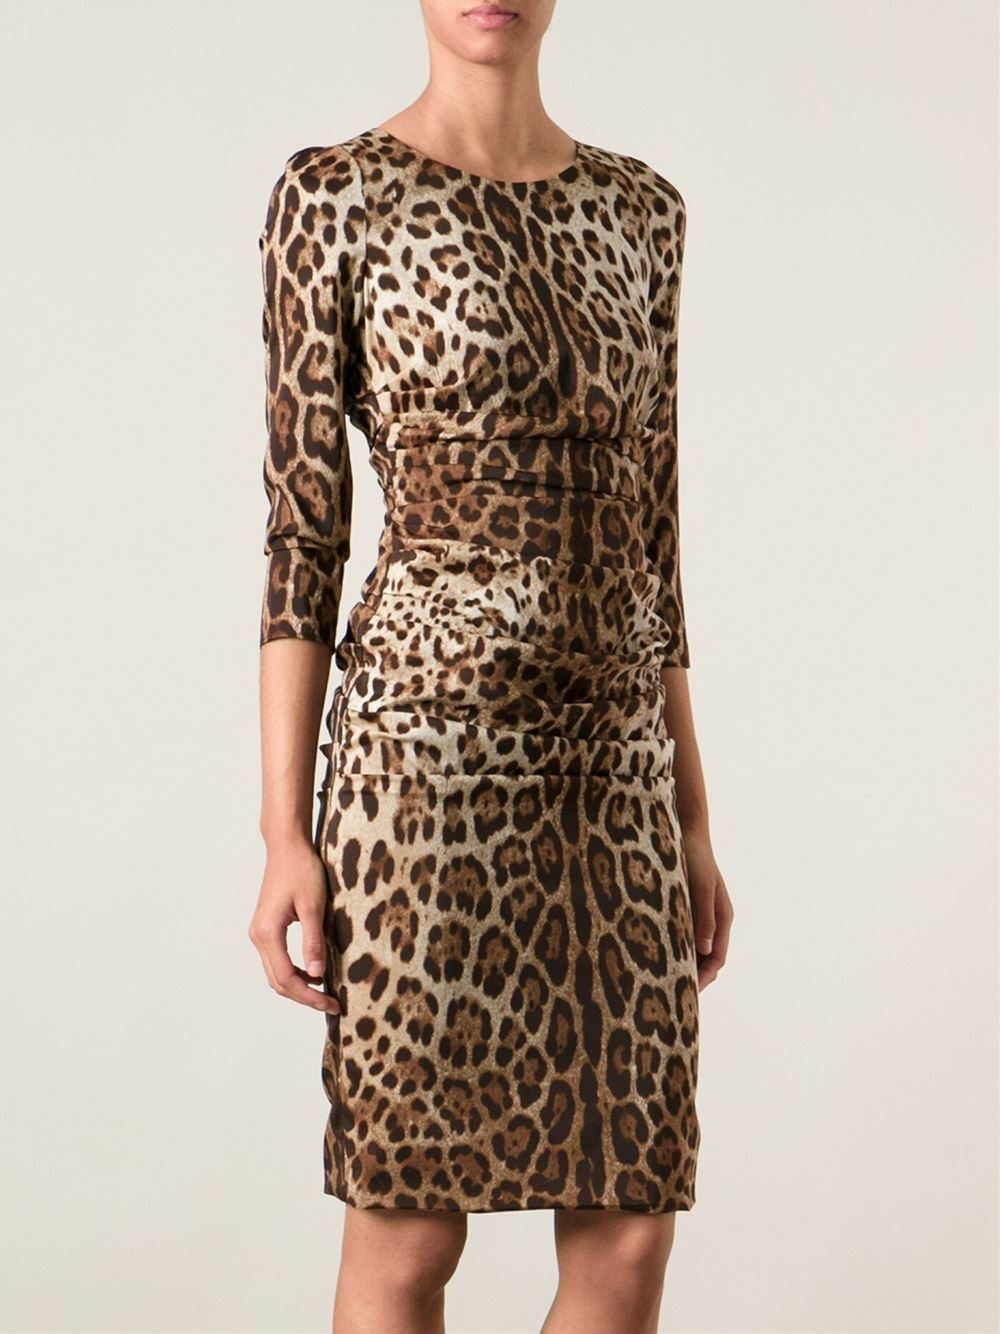 Lyst - Dolce & Gabbana Leopard Print Dress in Brown